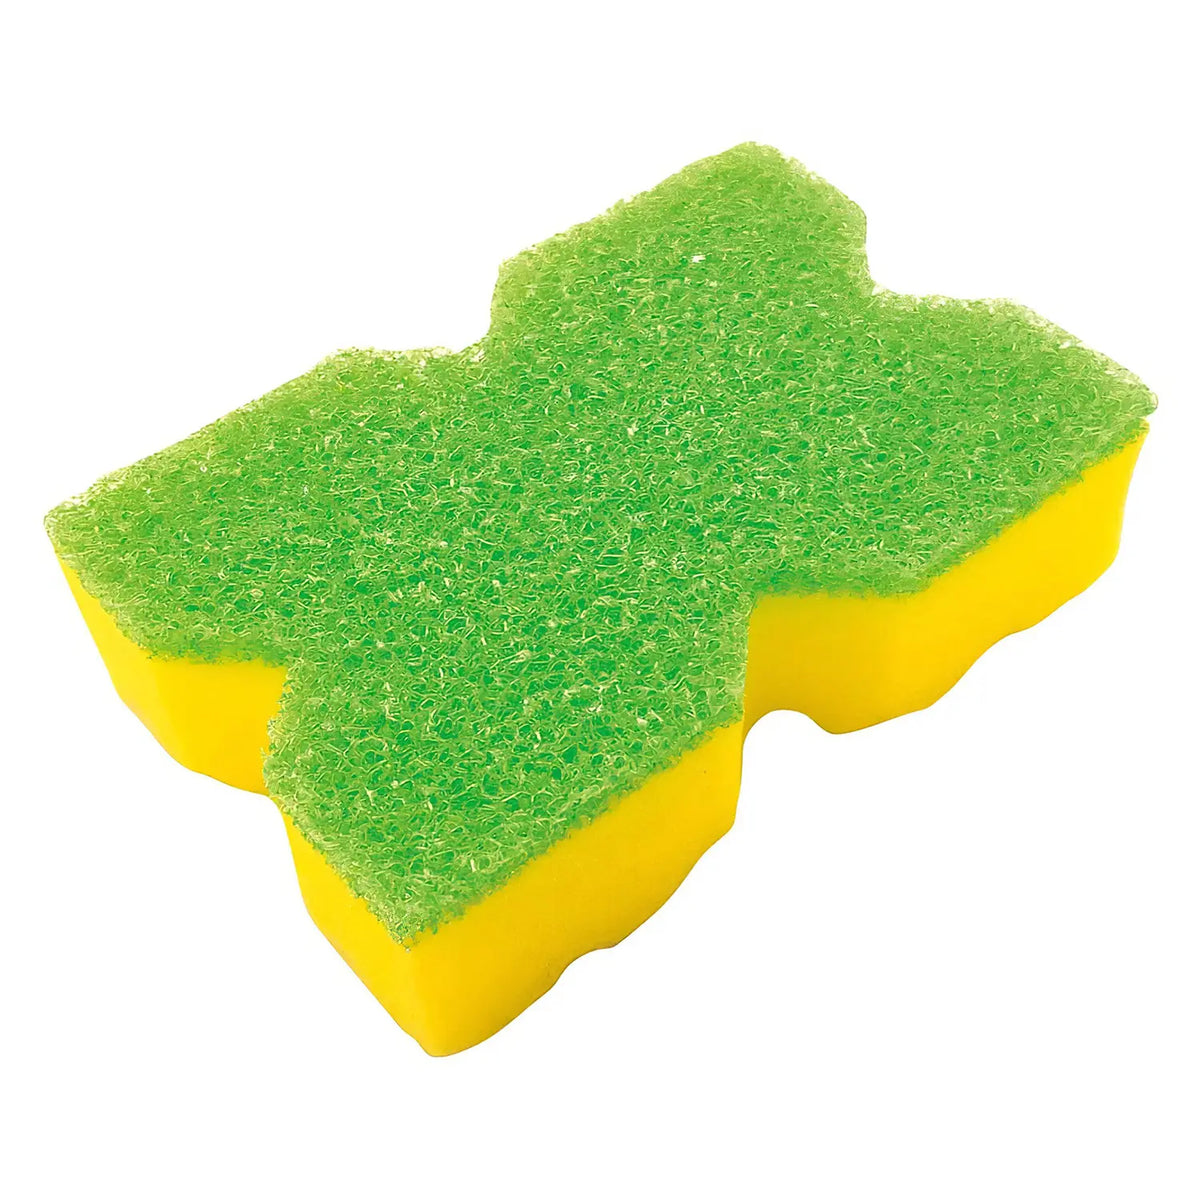 Kikulon Polyurethane Cleaning Sponge